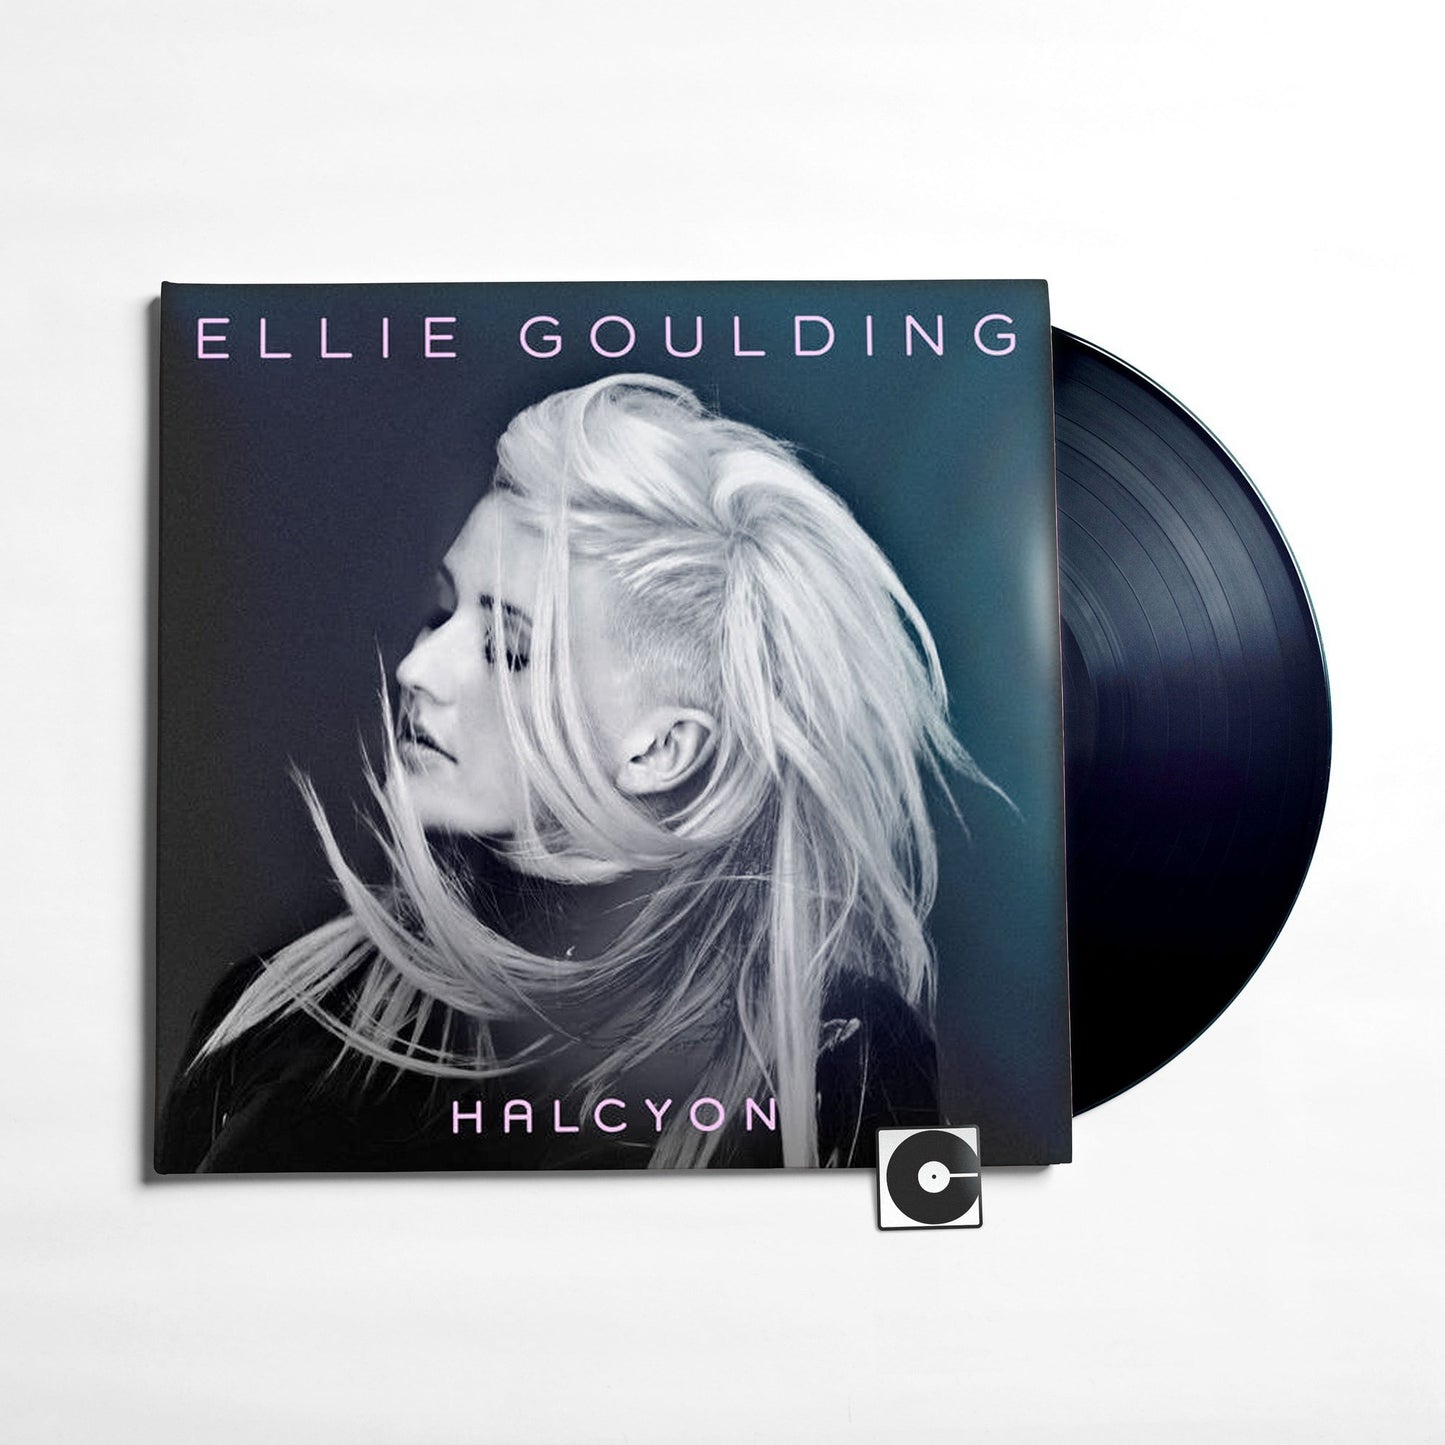 Ellie Goulding - "Halcyon"